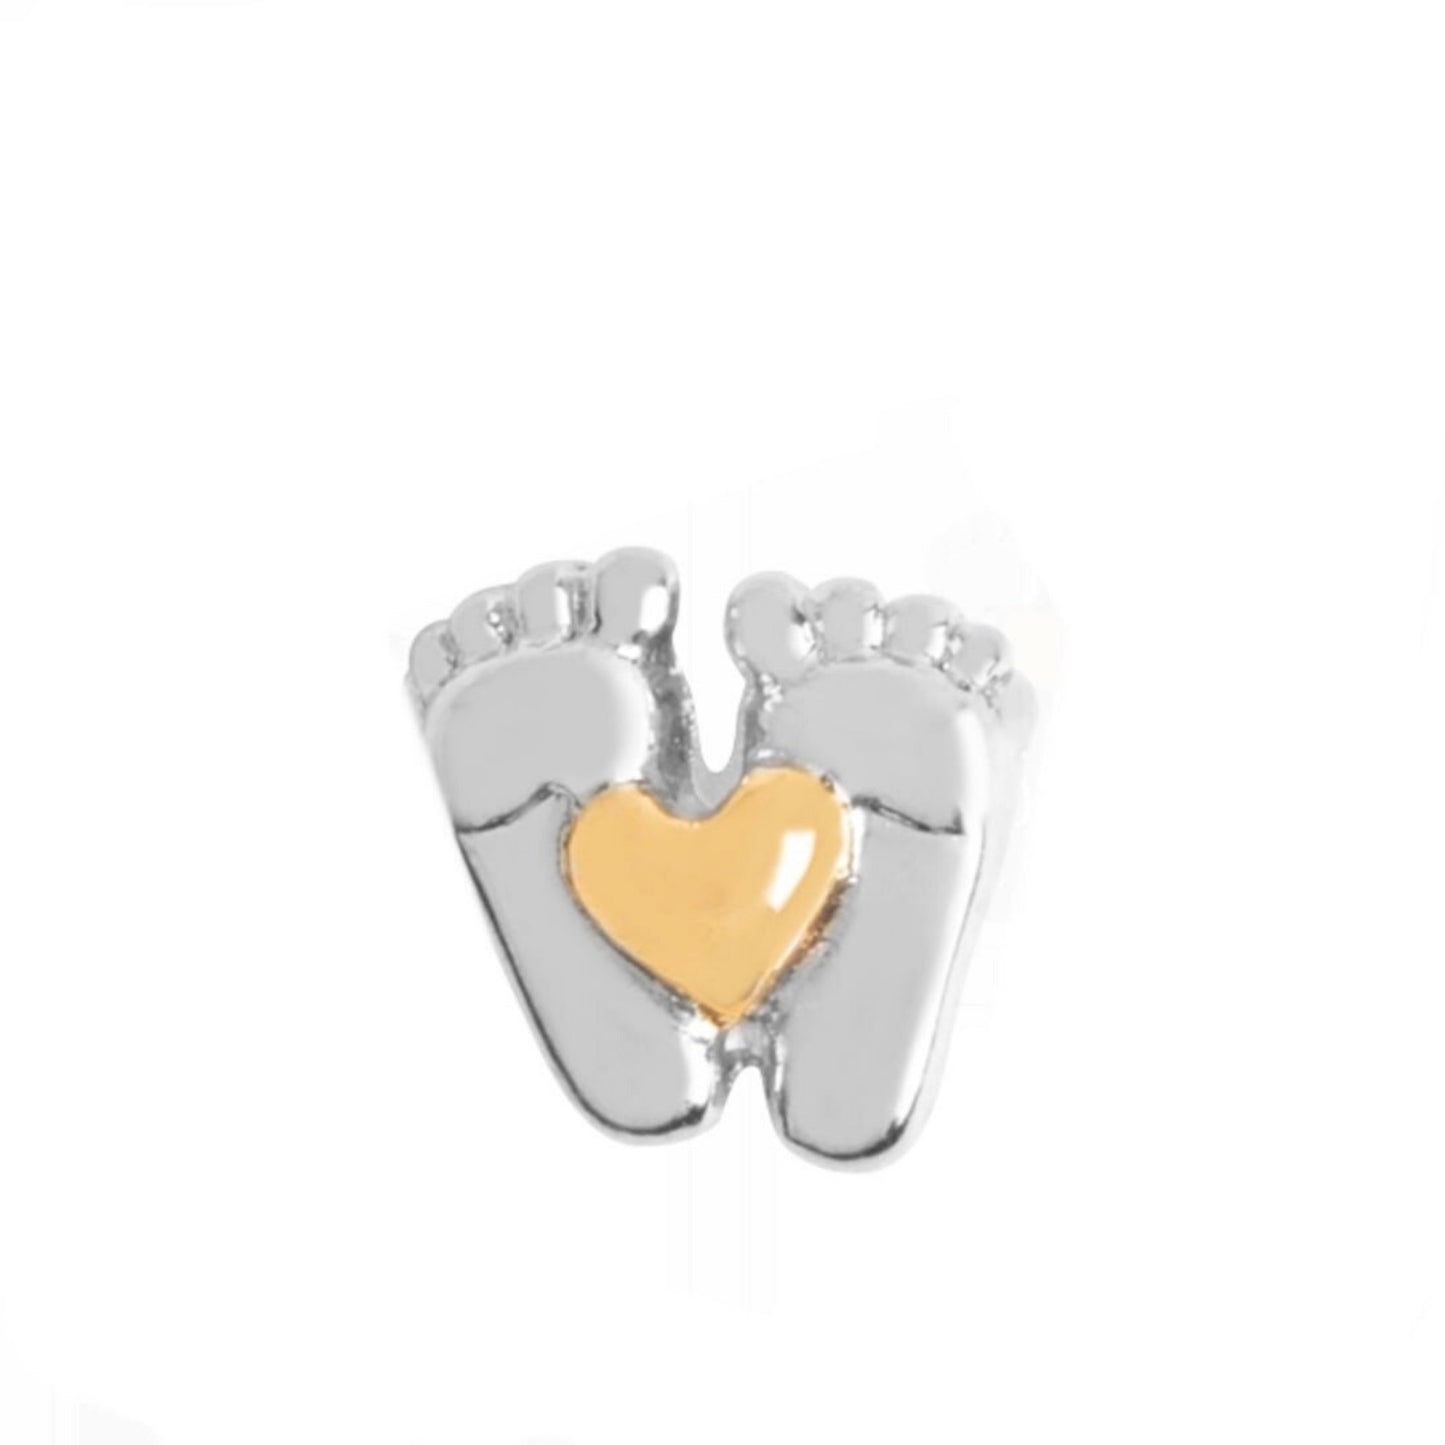 Memory Locket Charm - Baby feet - The Little Jewellery Company